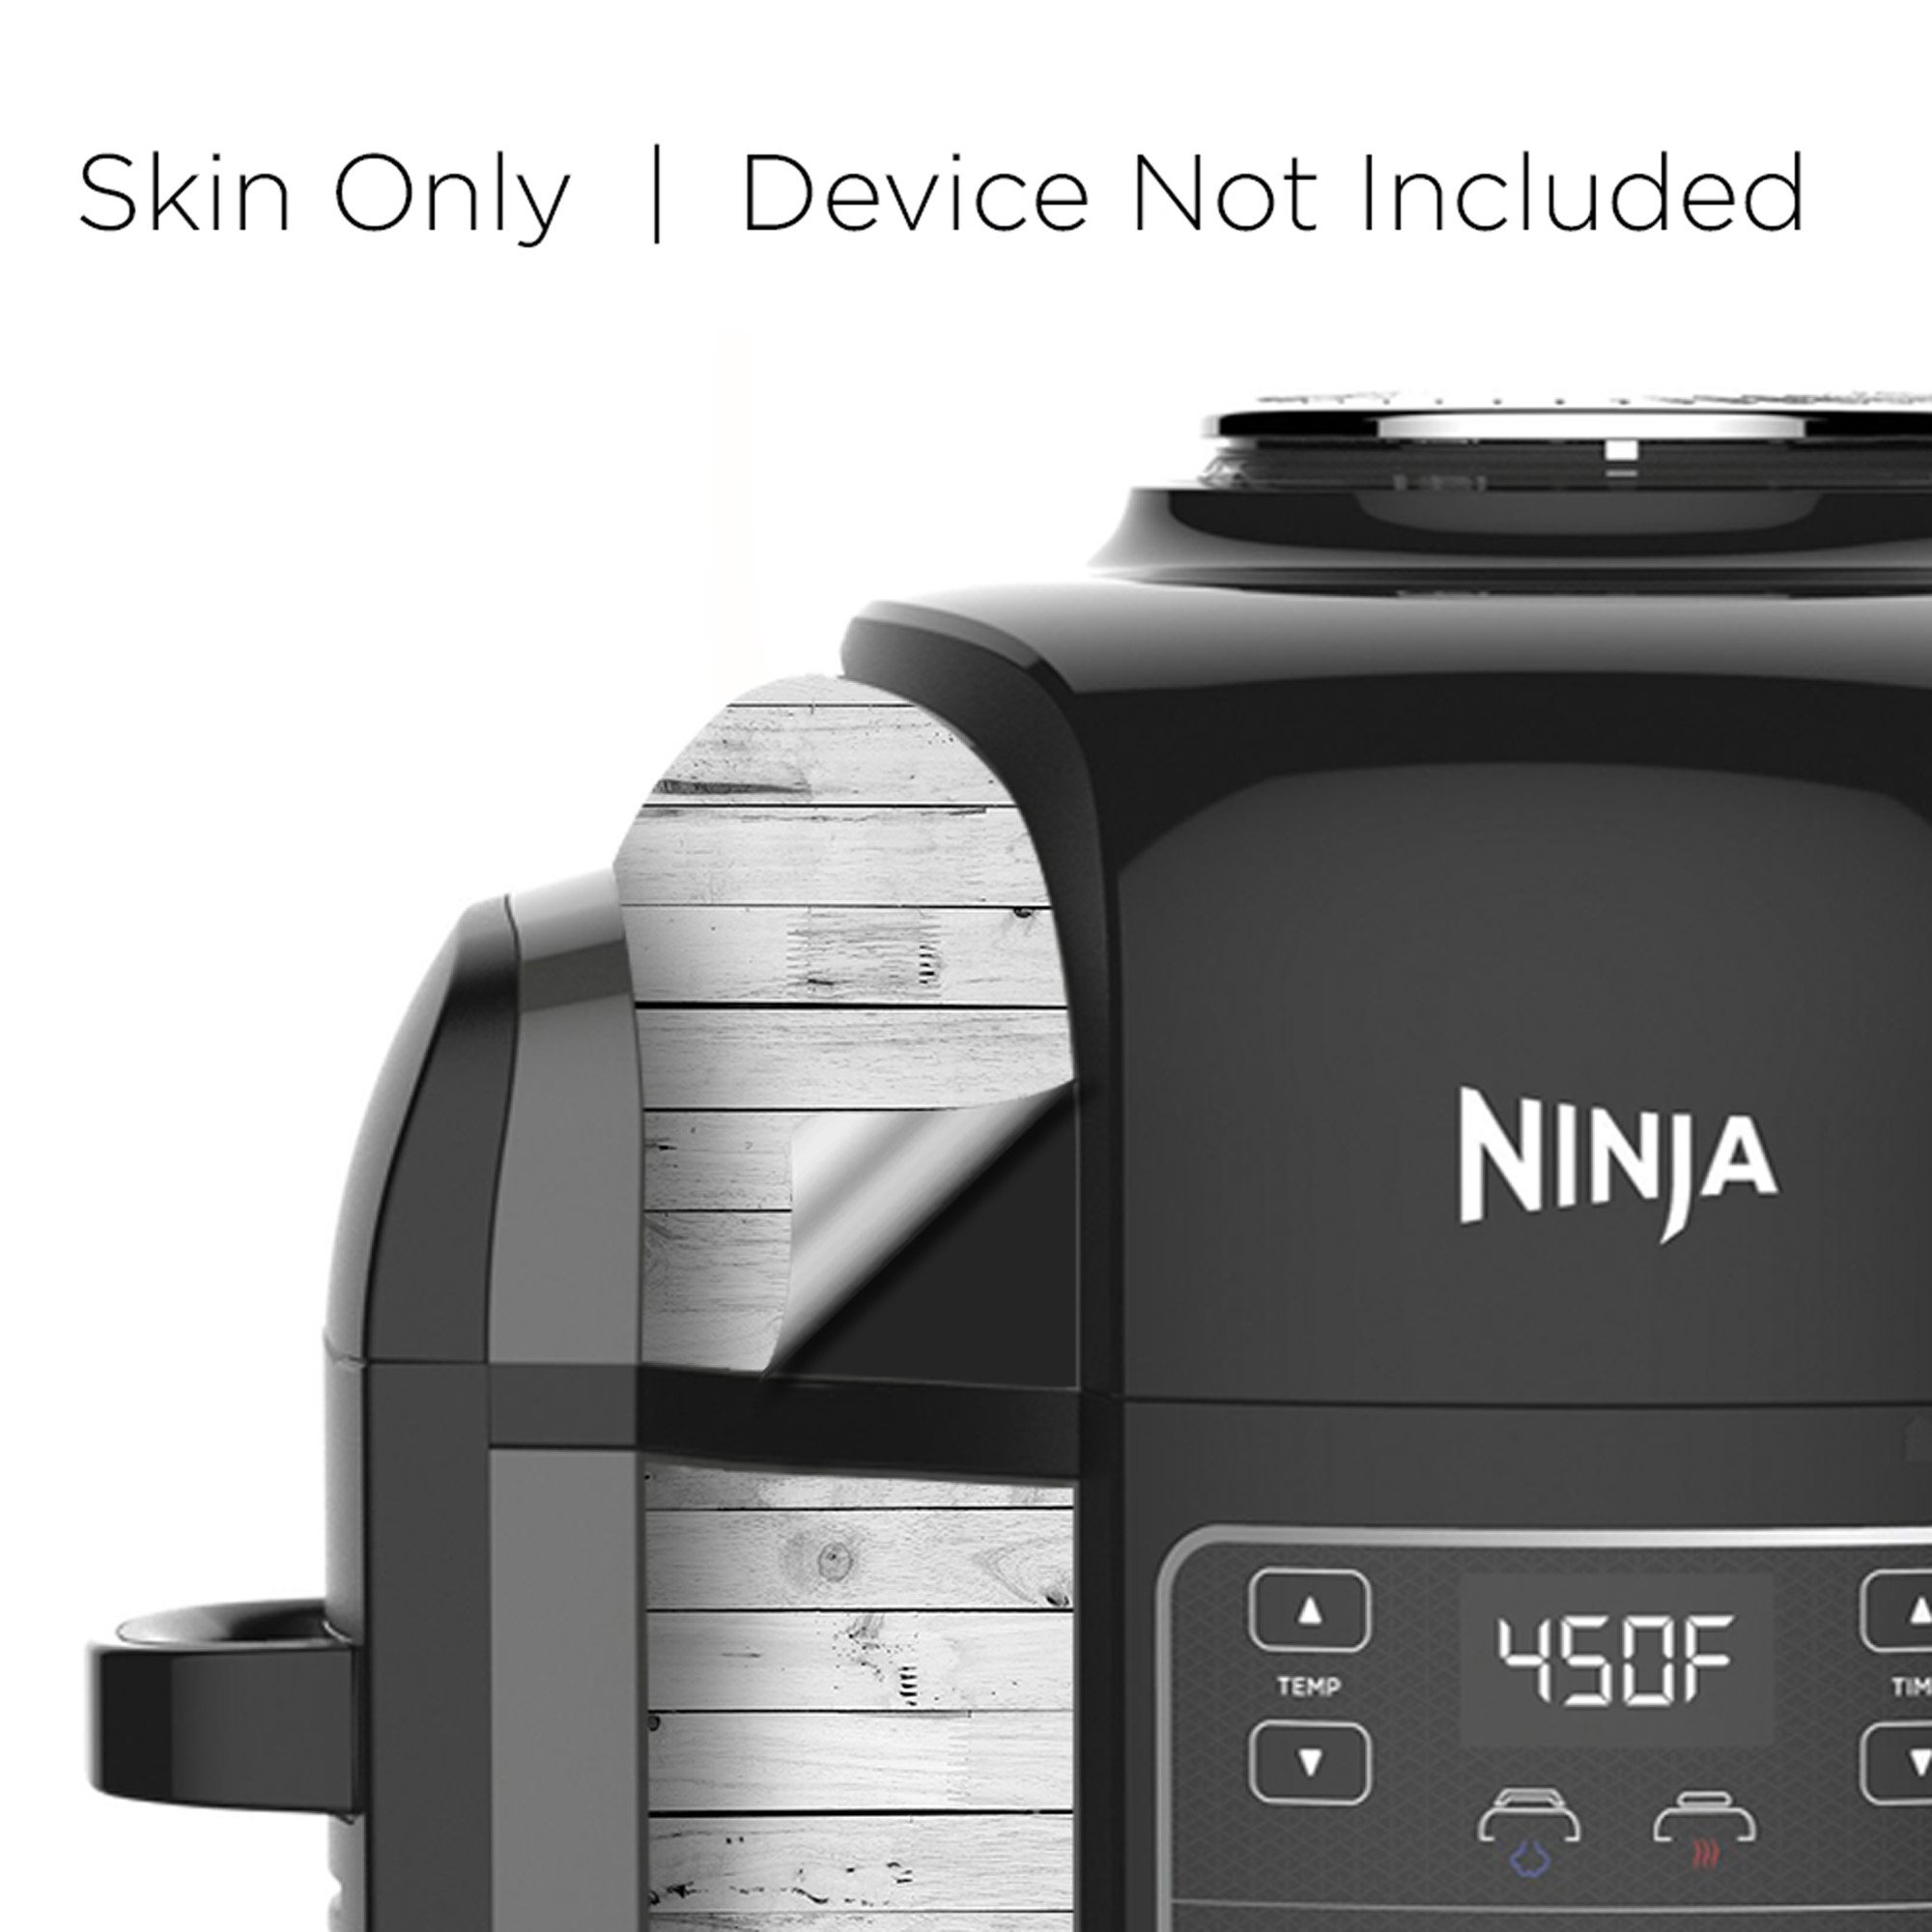 Skin Wrap for Ninja Foodi 6.5 Quart QT Accessories Cover Sticker | Wraps fit Ninja Foodi 6.5 Quart QT Mdl: OP302 107 | Grey White Washed Wood Planks - image 3 of 3